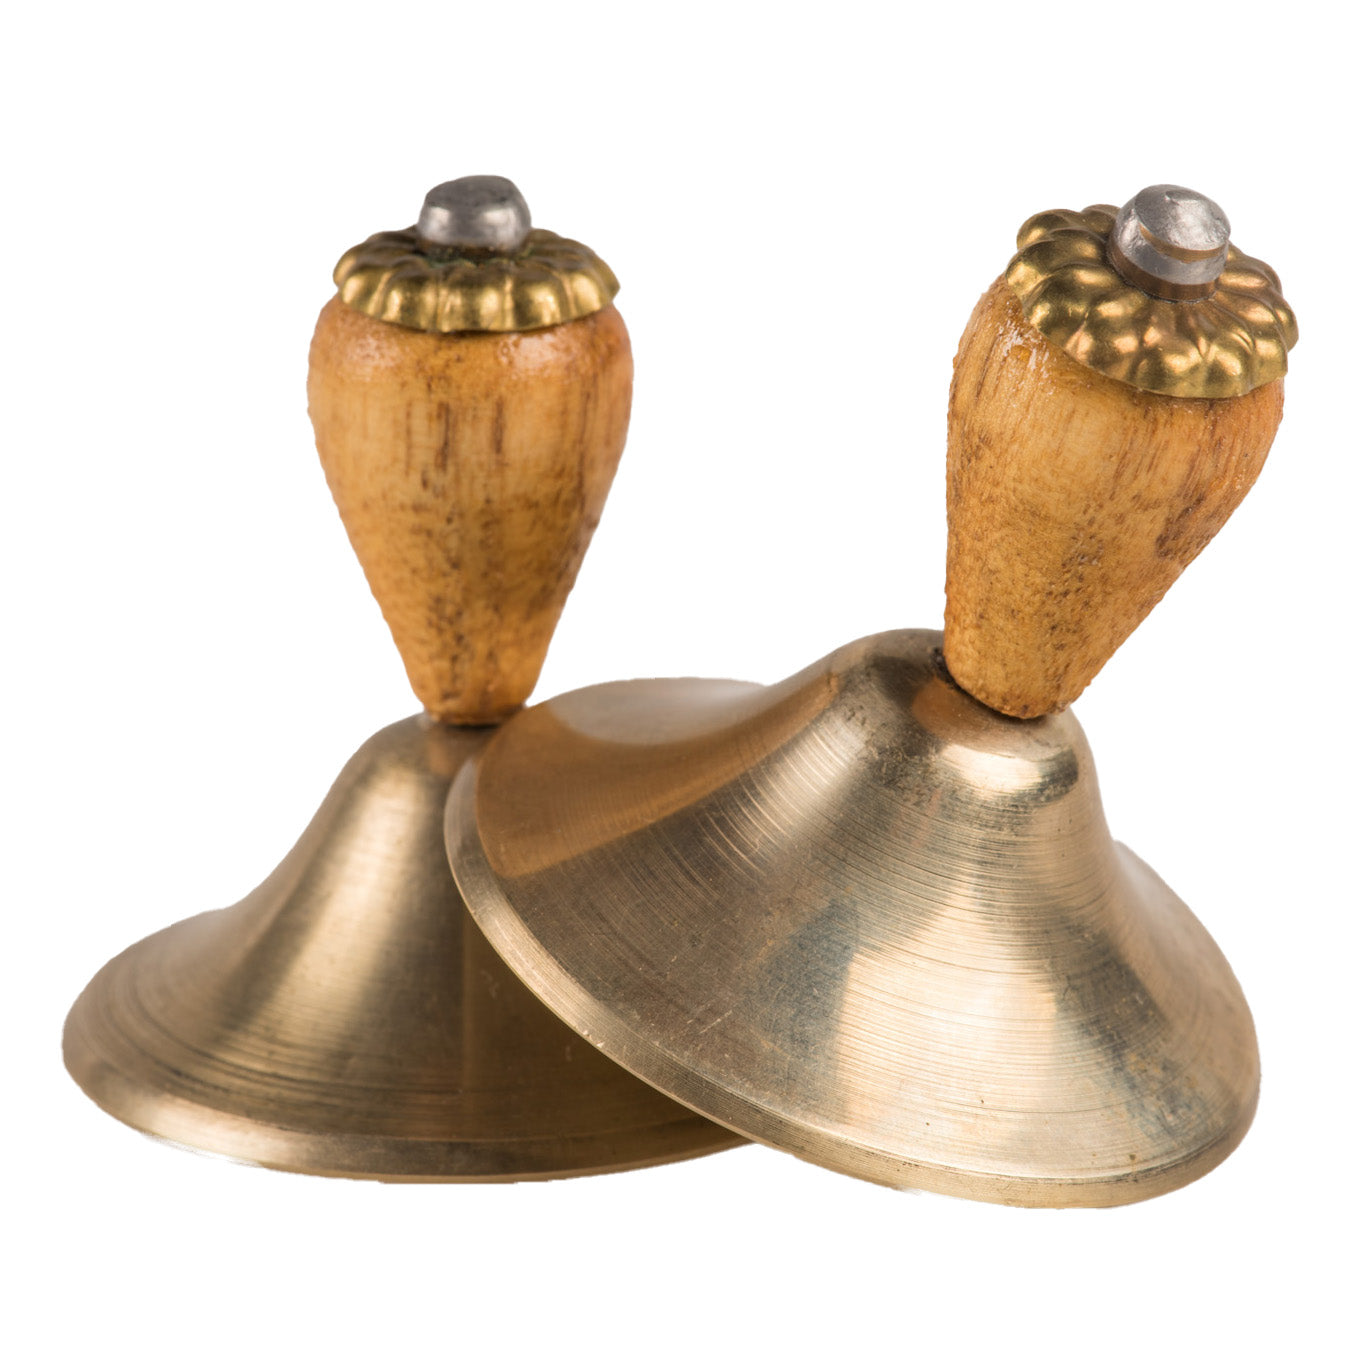 Beaded Kaimani (Wooden Handgrip Cymbals)